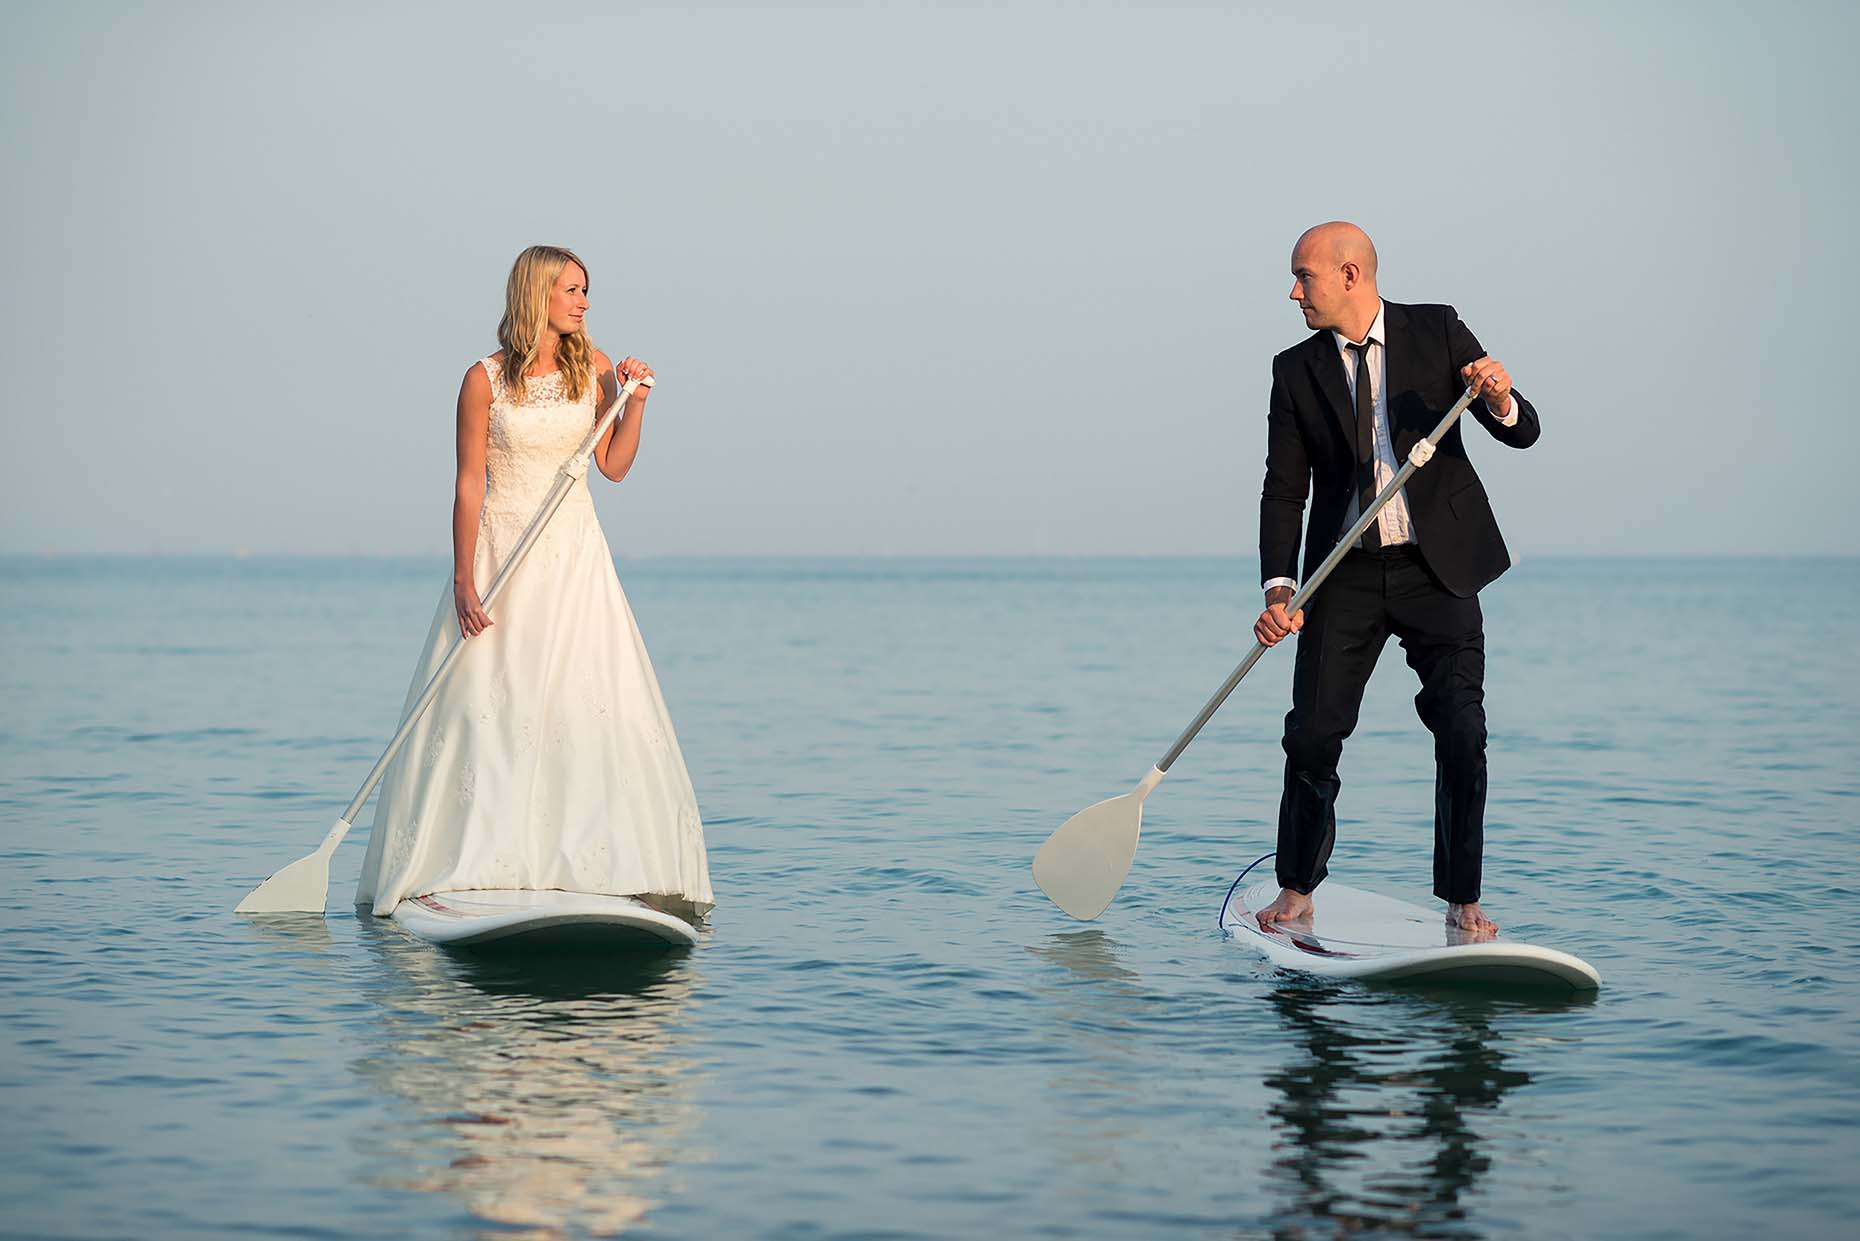 paddleboard-wedding-shoot-dorset-megan-dress-bride-groom-03